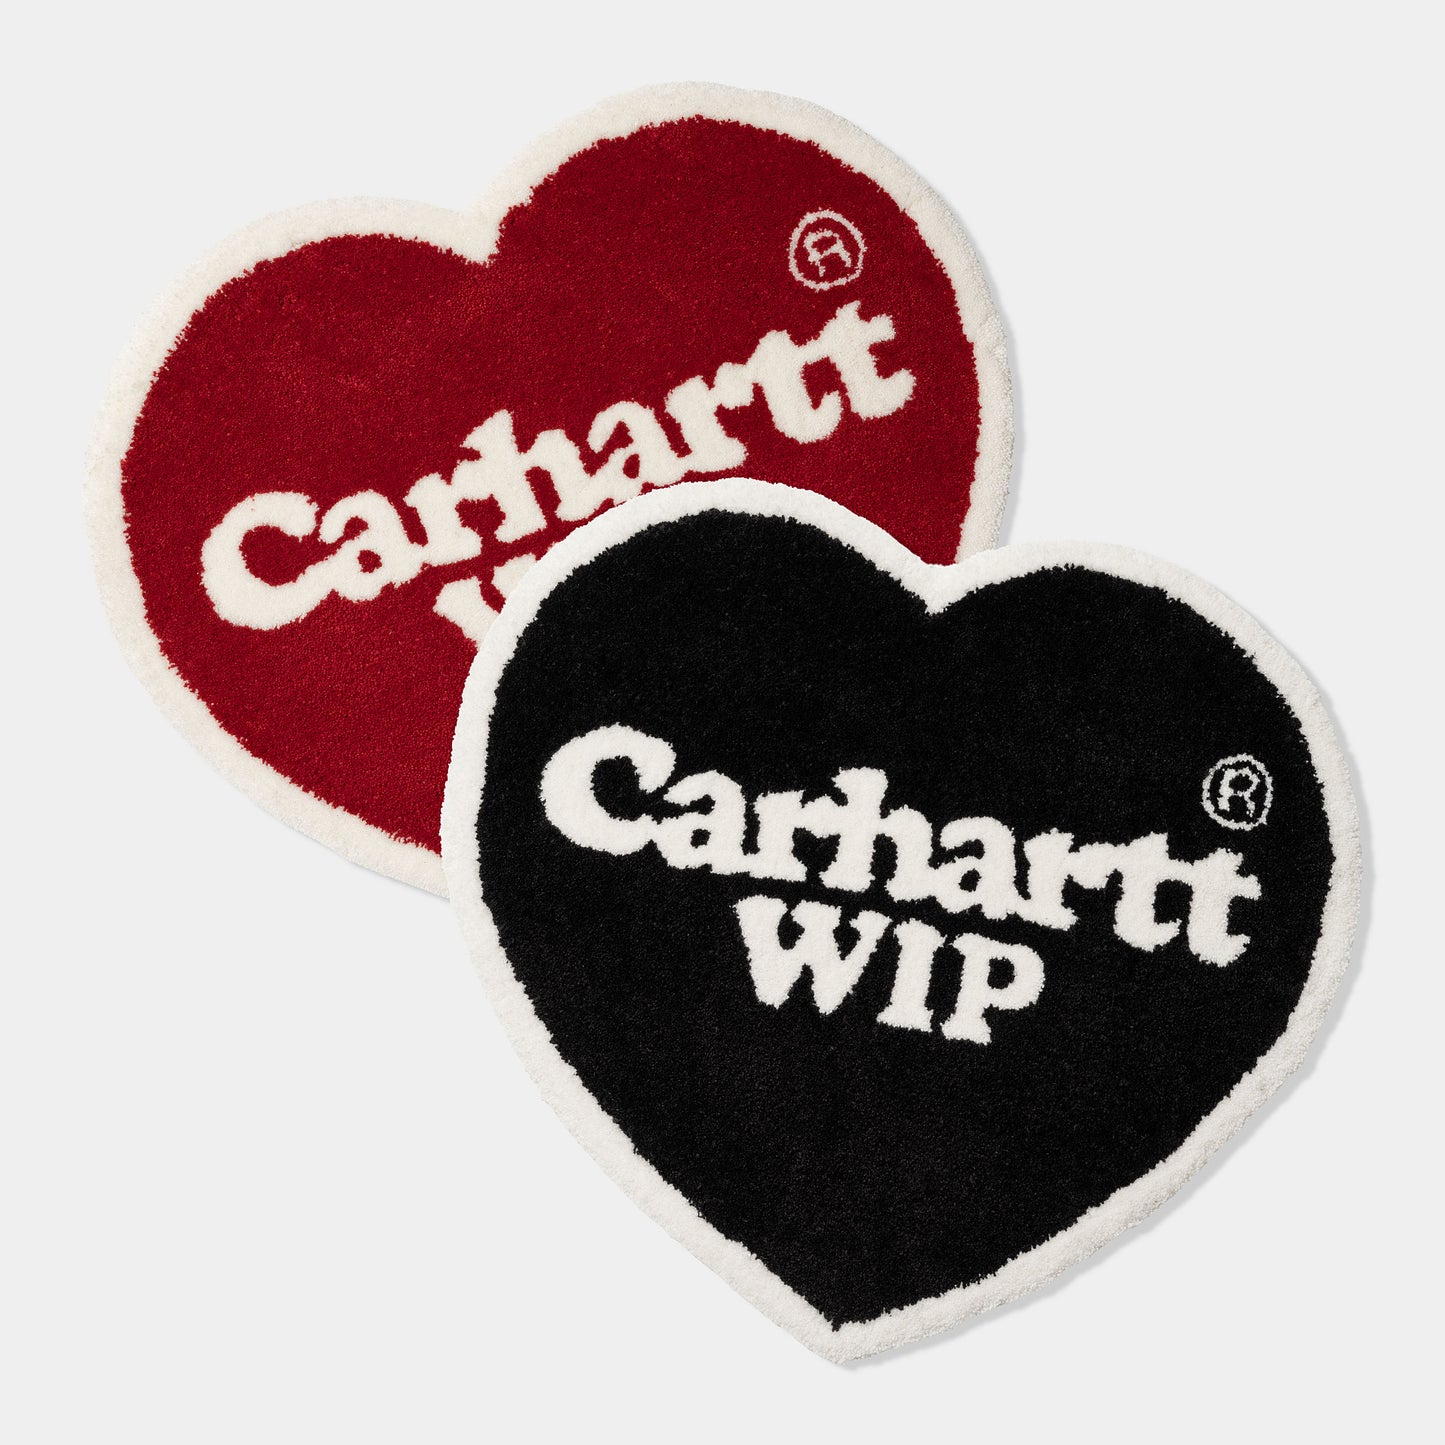 CARHARTT WIP HEART RUG - BLACK WHITE